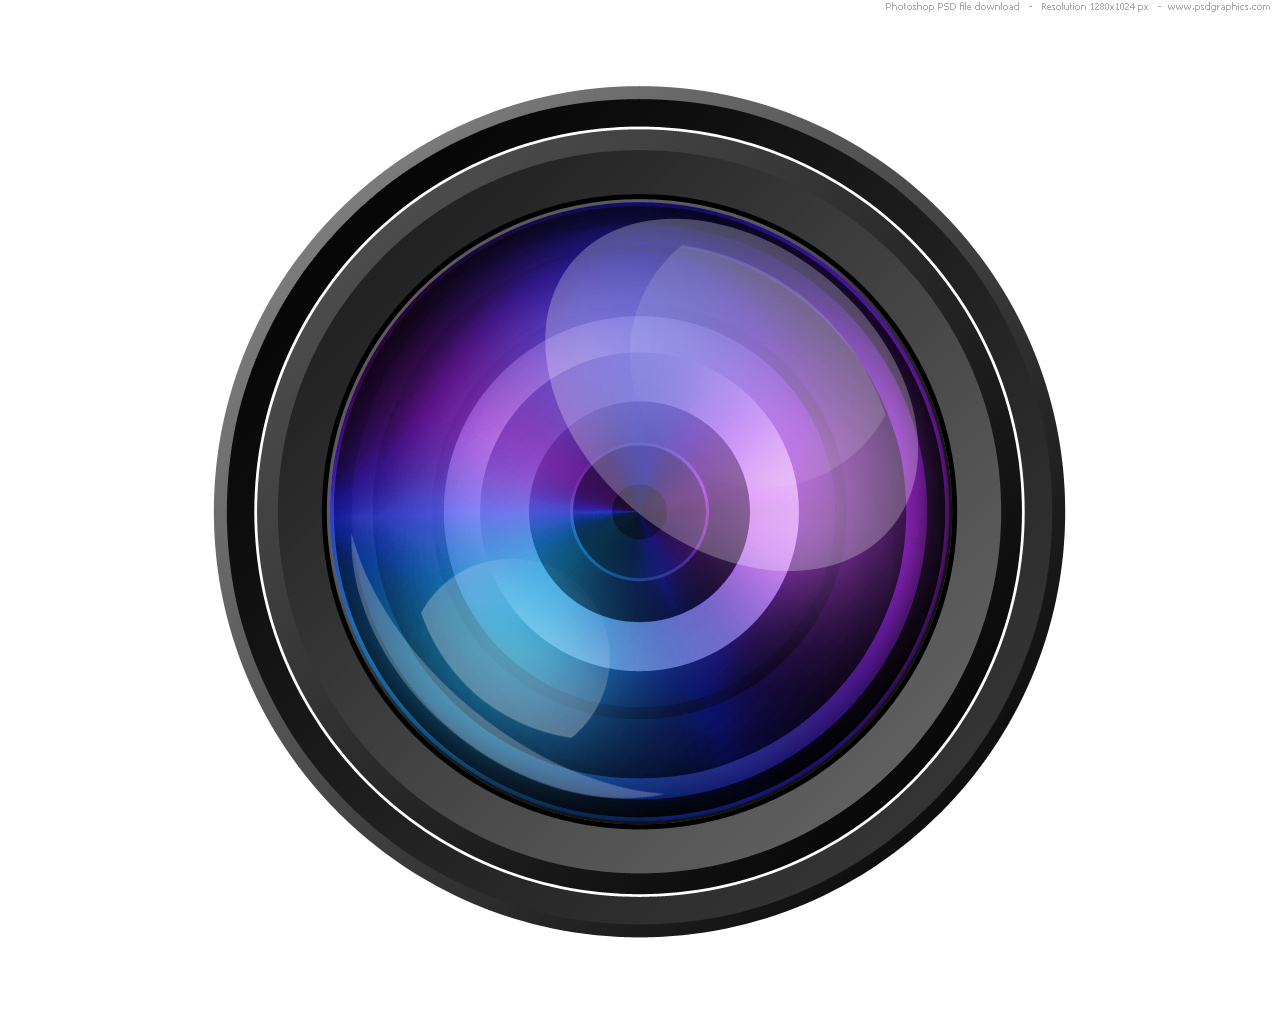 ... Camera lens icon